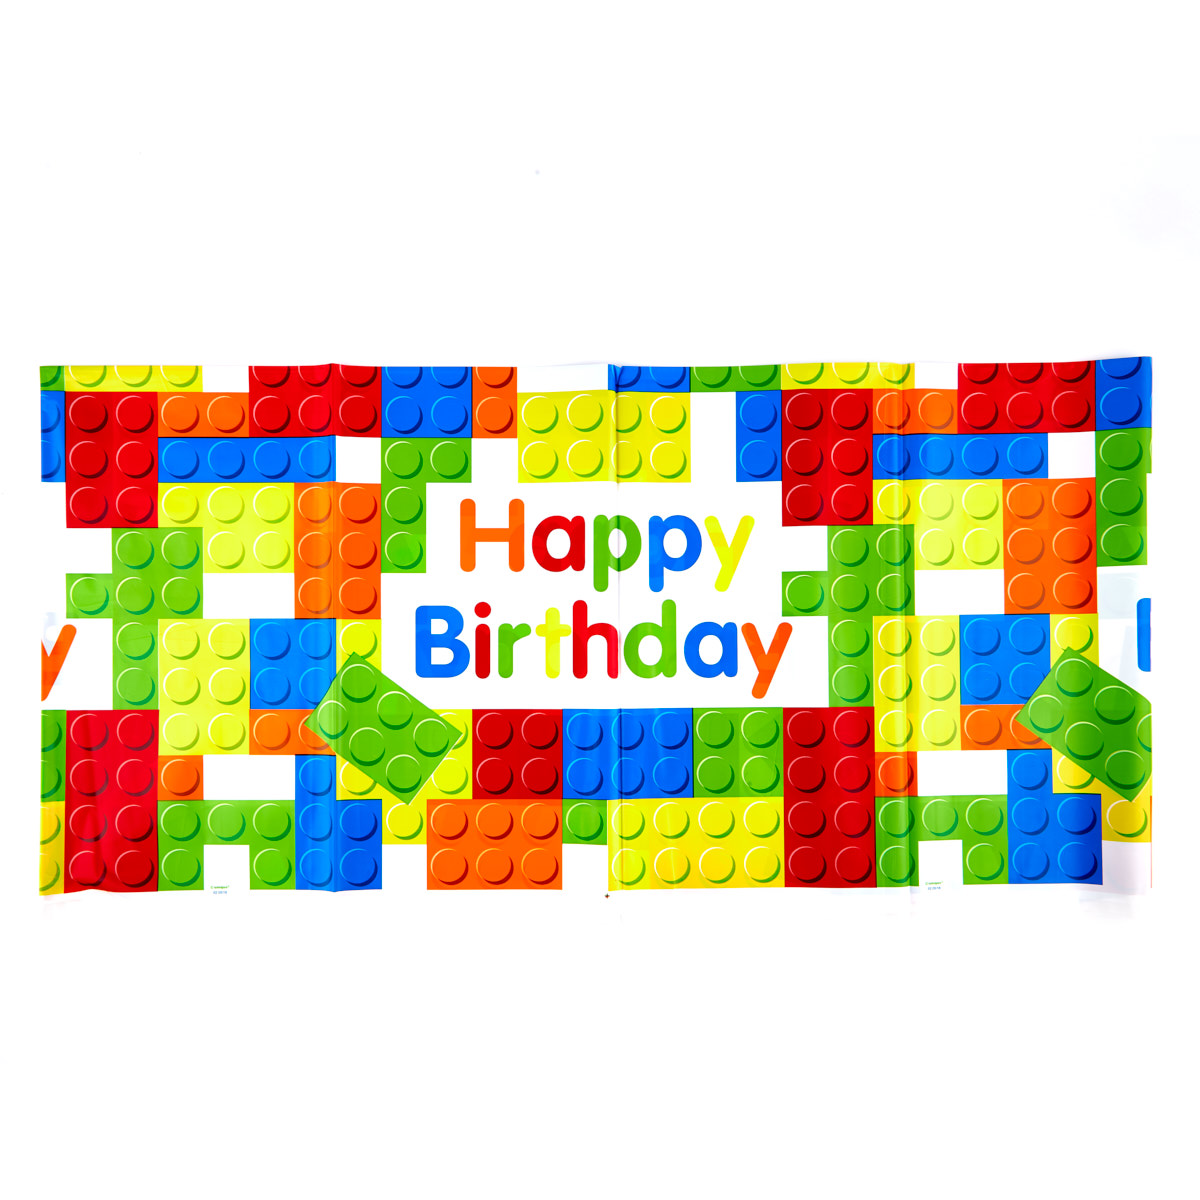 Birthday Building Blocks Party Tableware & Decoration Bundle - 16 Guests